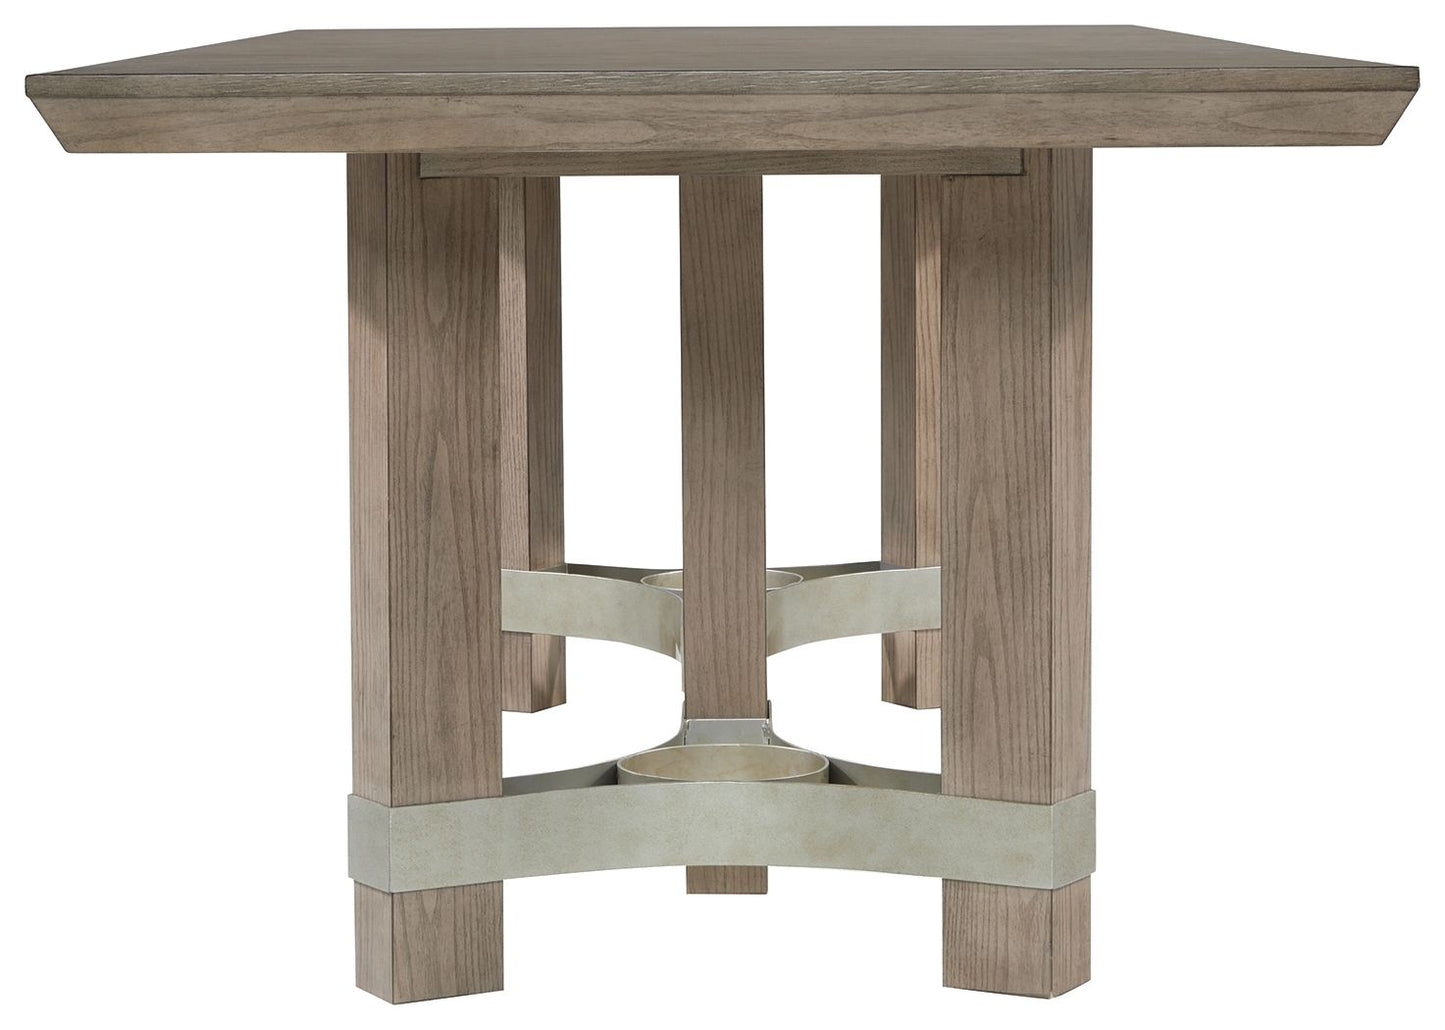 Chrestner - Brown / Beige - 8 Pc. - Rectangular Dining Room Table, 6 Side Chairs, Server